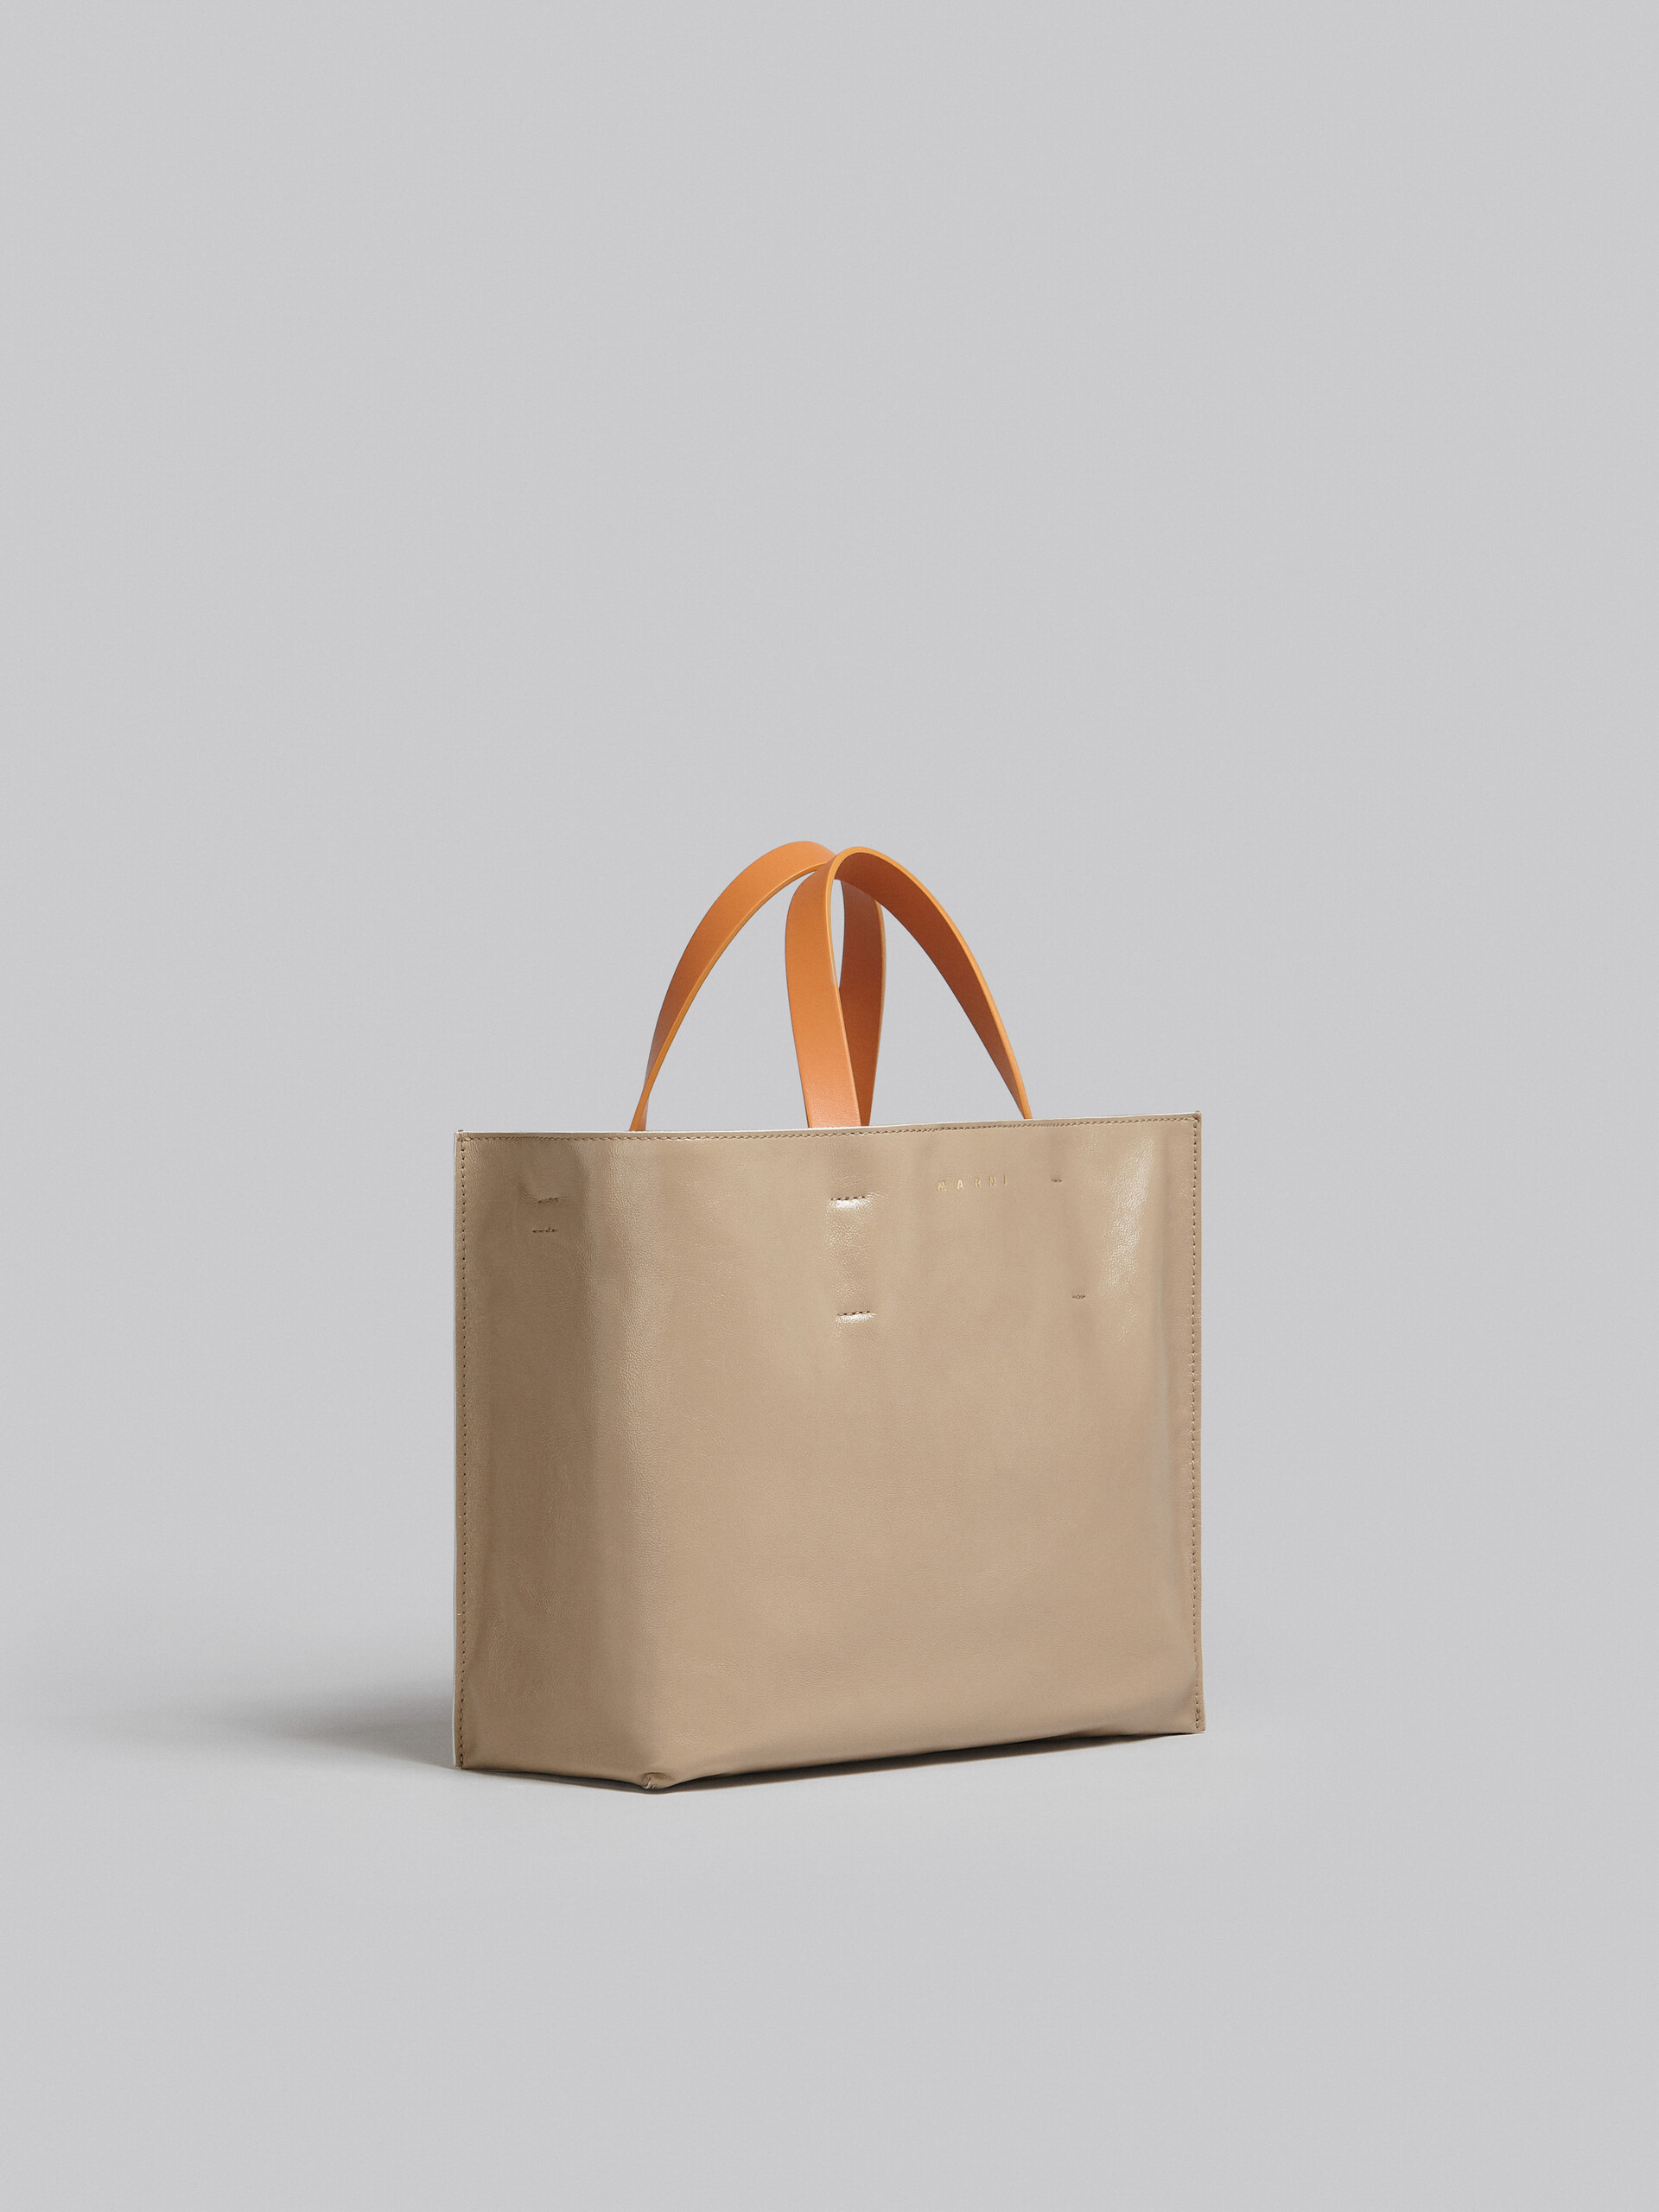 MUSEO SOFT bag piccola in pelle nera verde e arancio - Borse shopping - Image 6